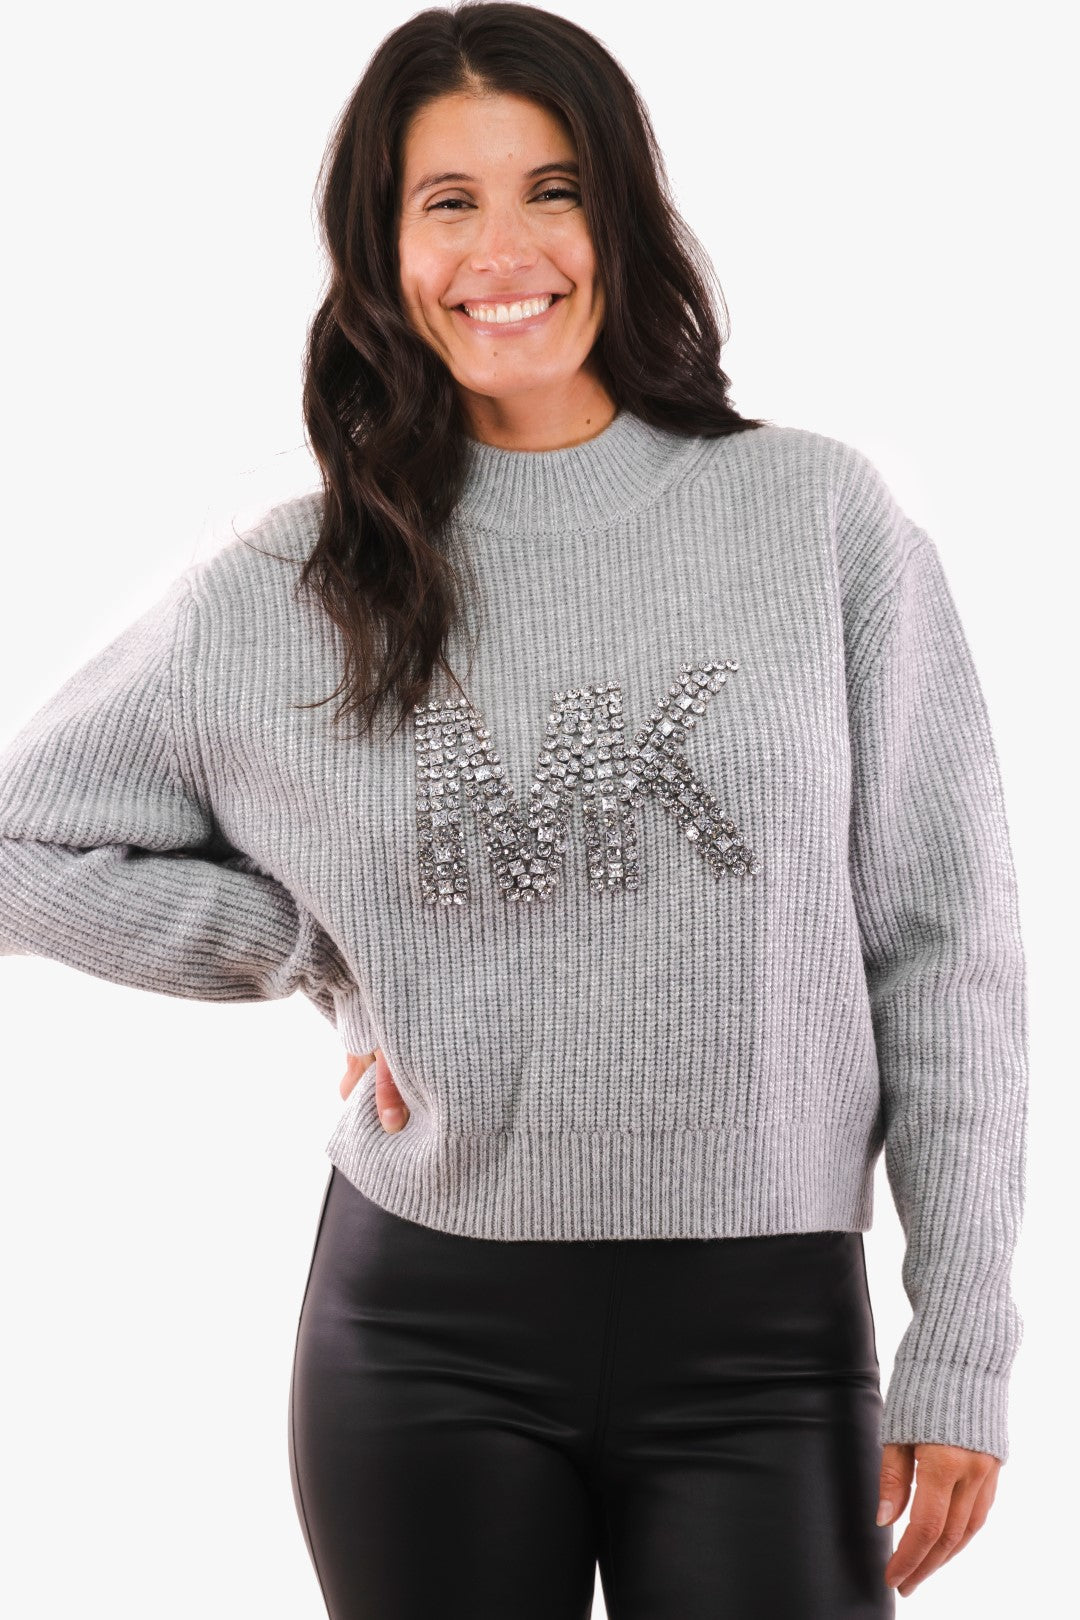 Gray Michael Kors sweater